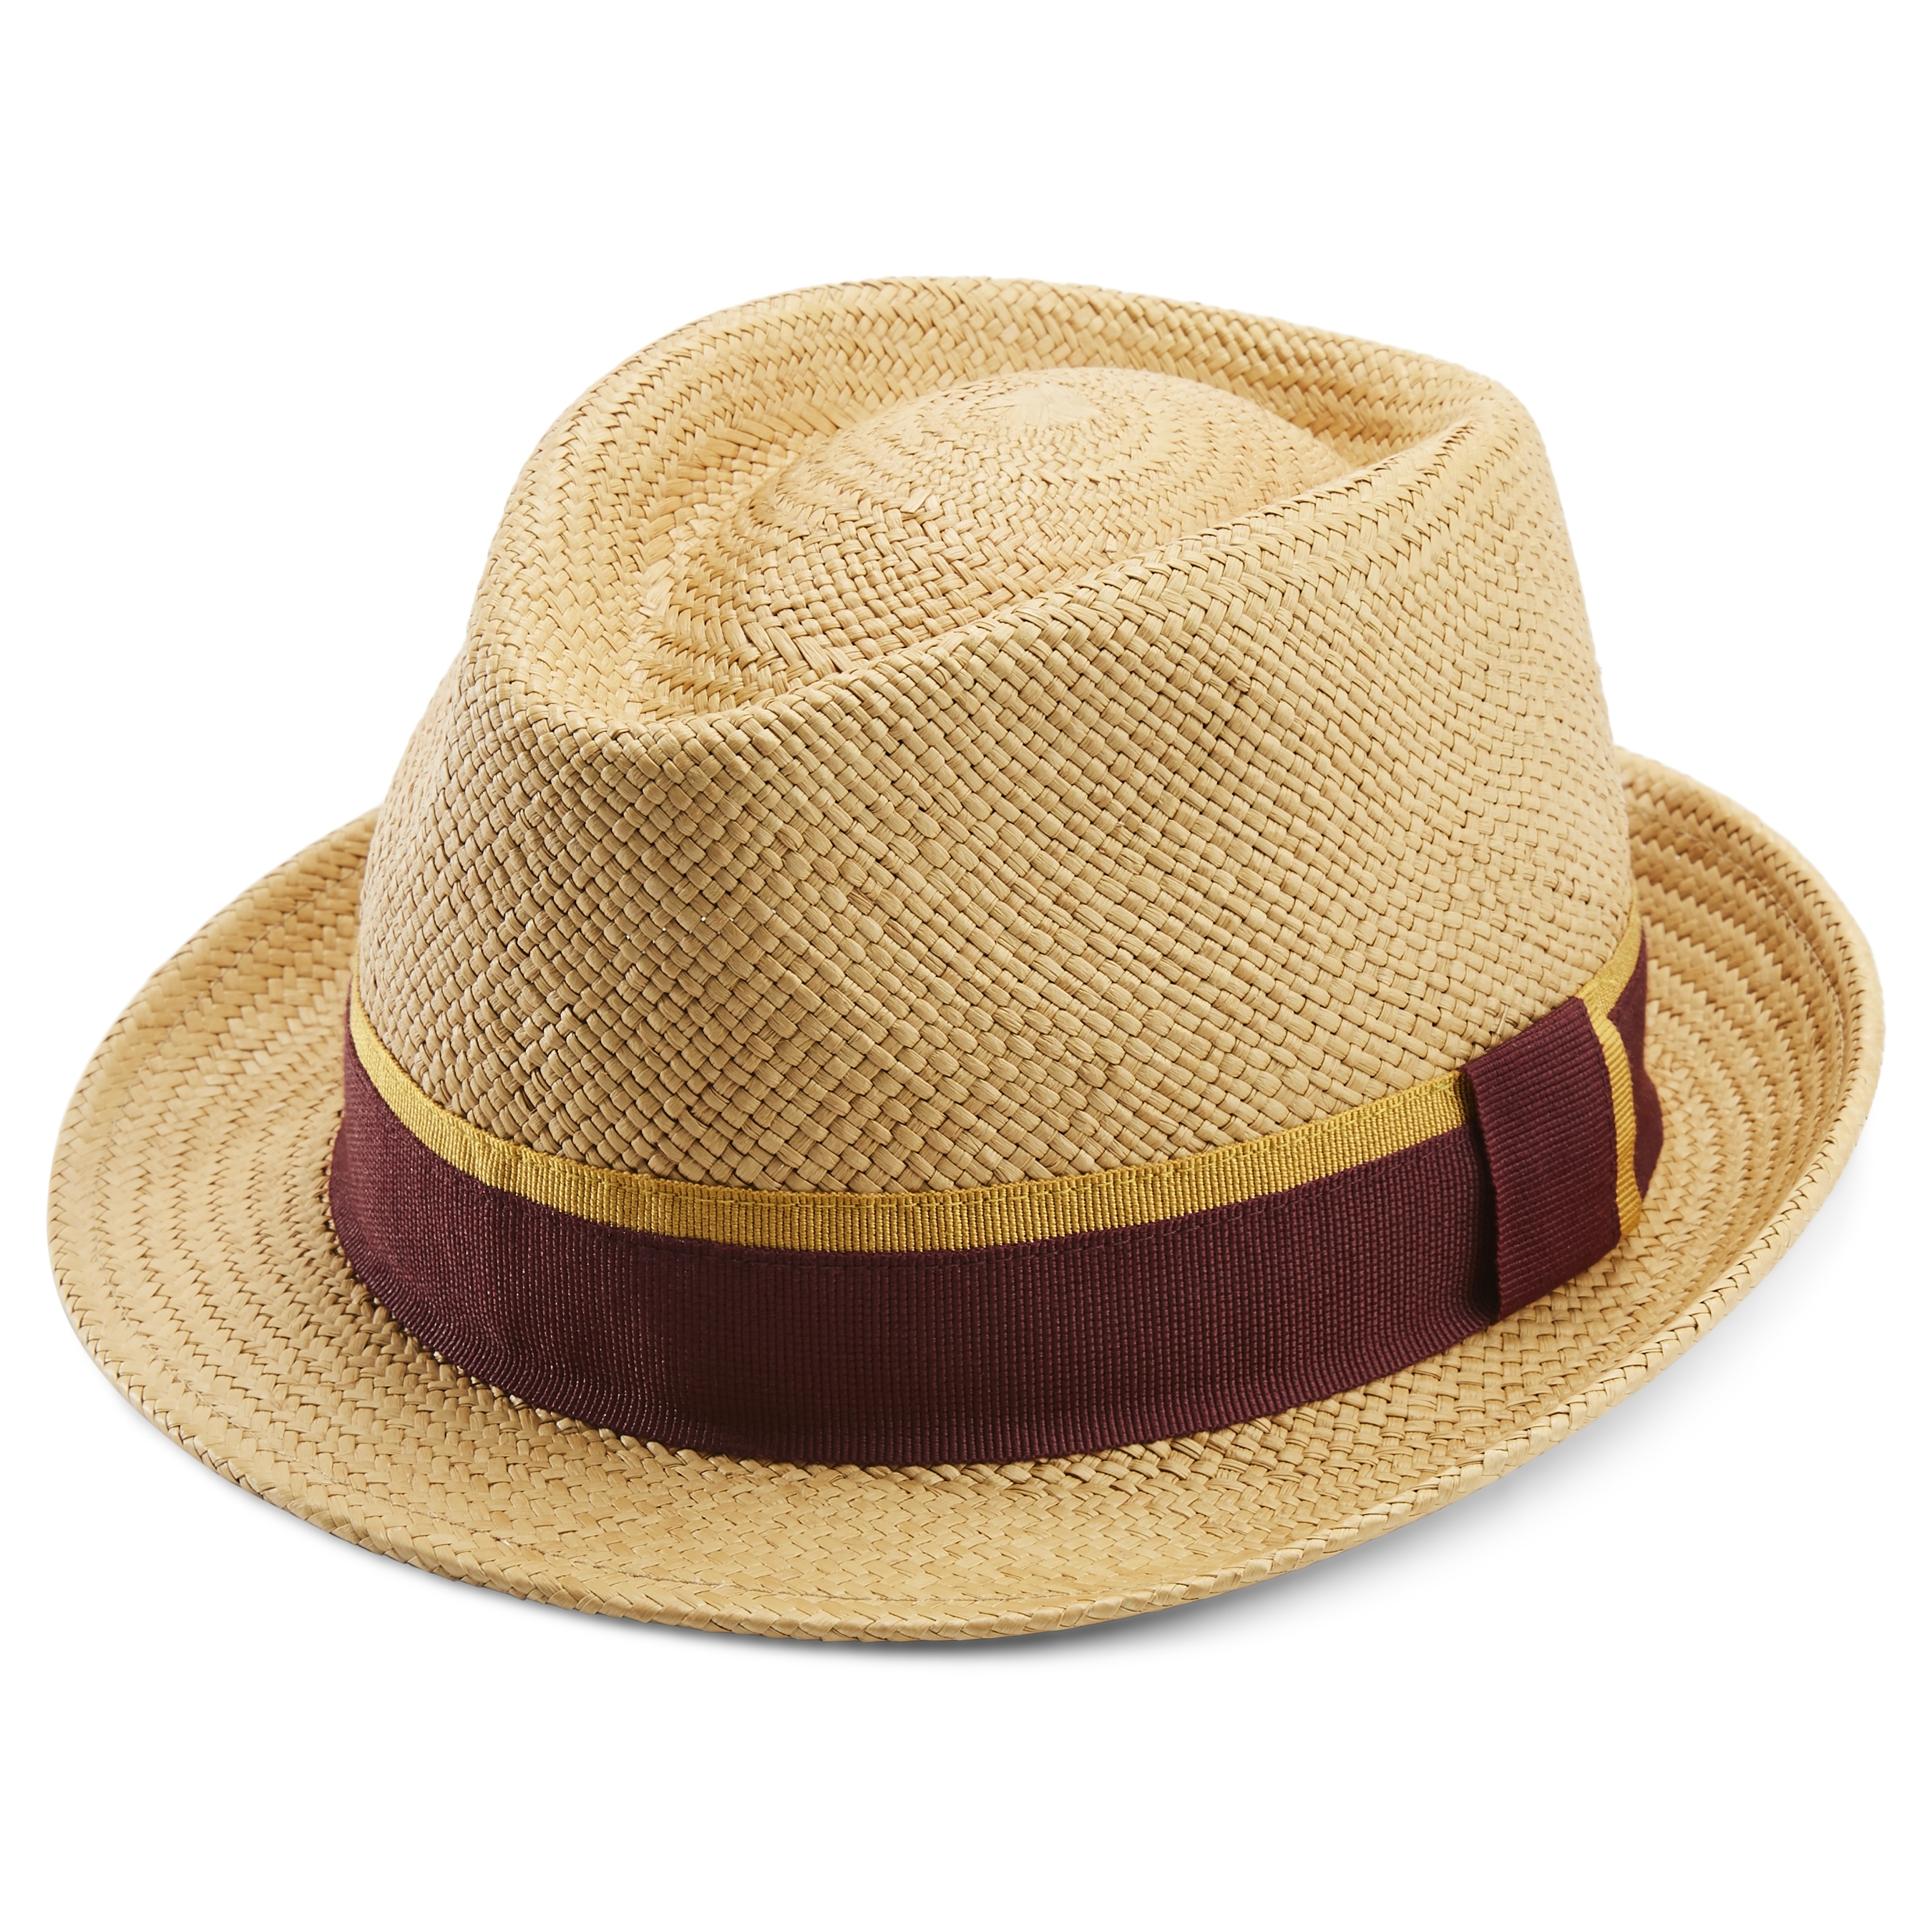 Panama Straw Hat - For Men - Fawler